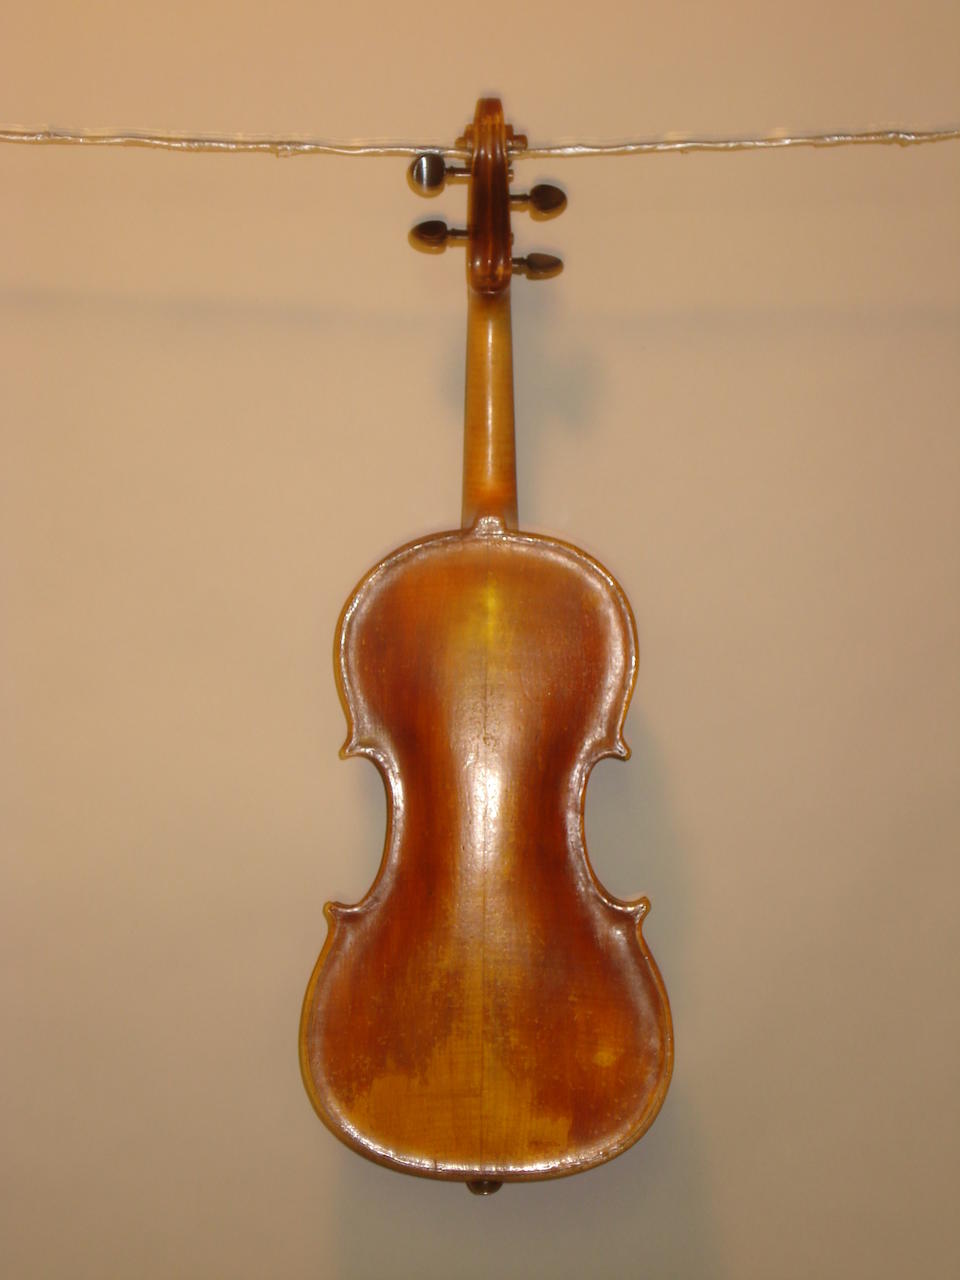 A Viola by Melvin Goldsmith, 1998